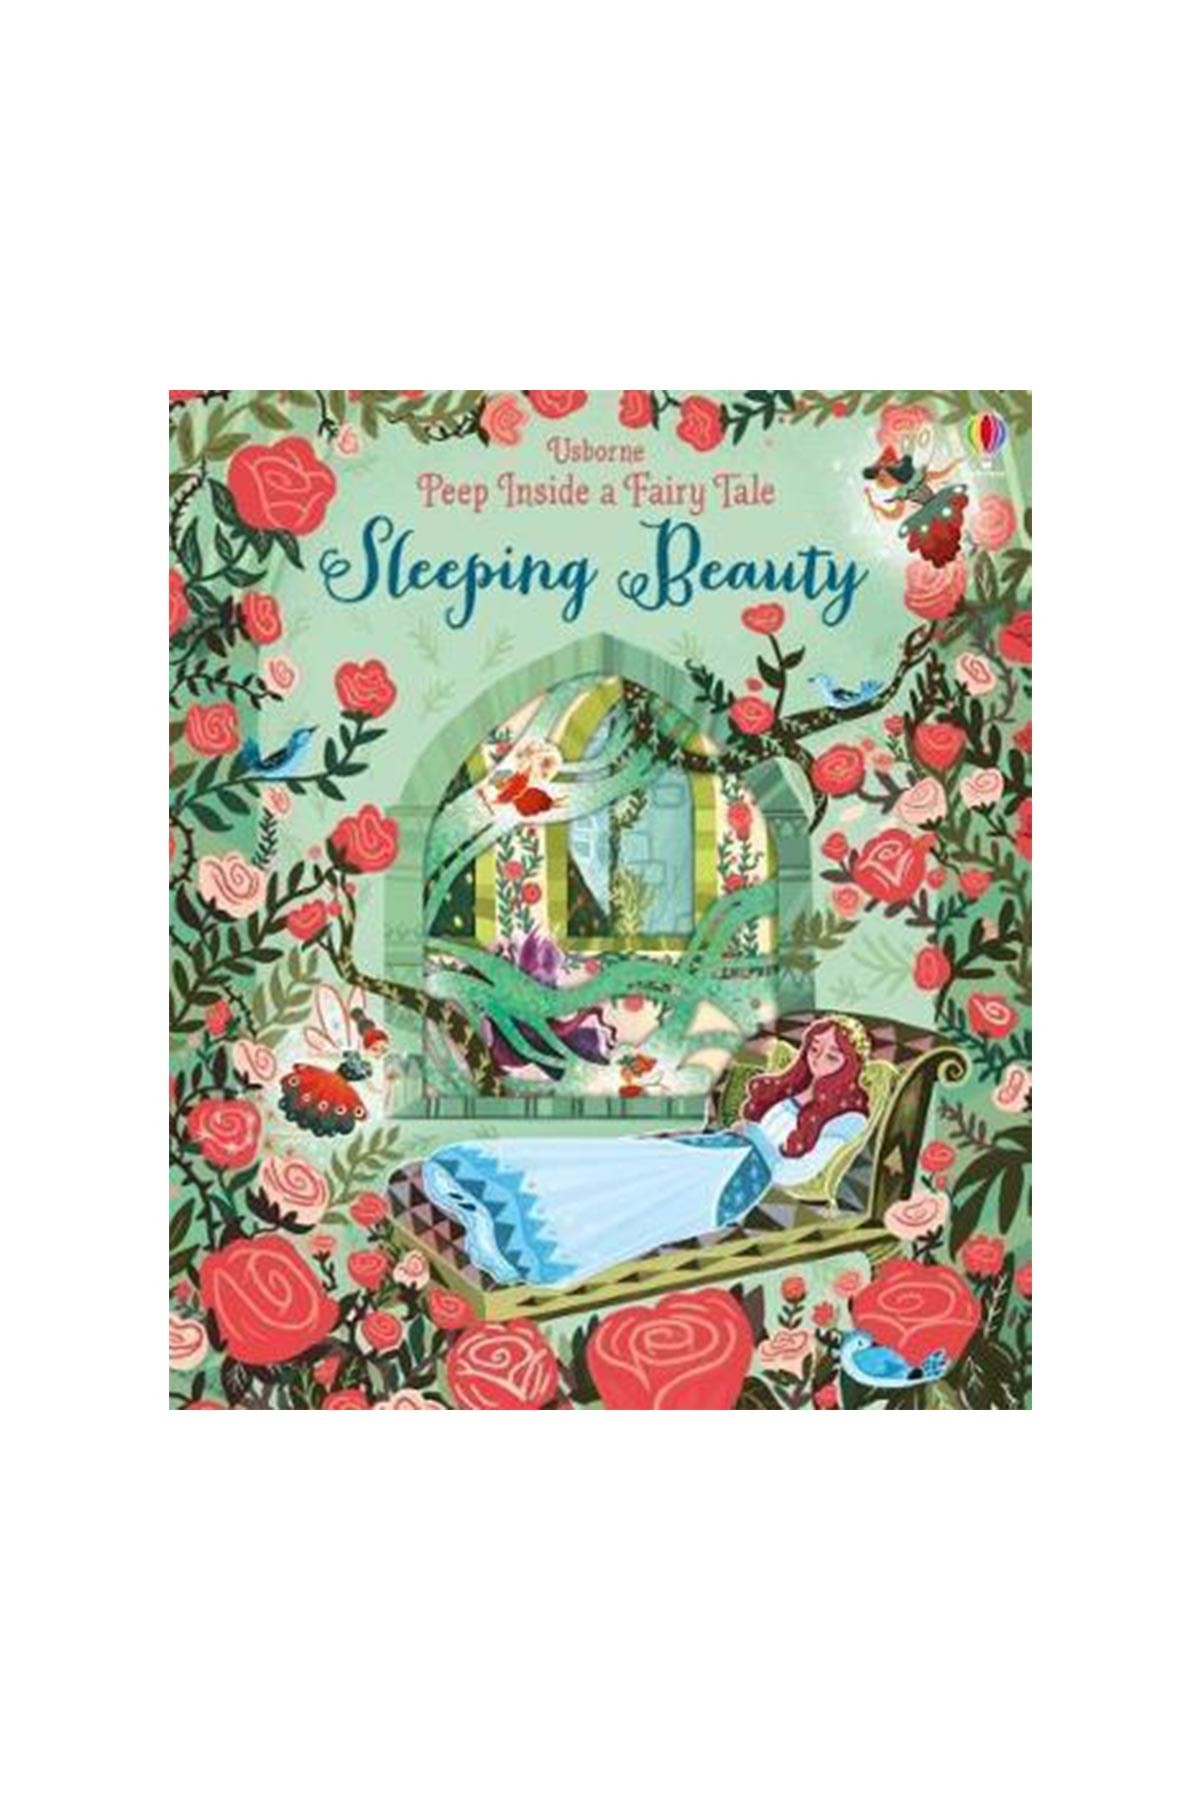 The Usborne Peep Inside a Fairy Tale Sleeping Beauty